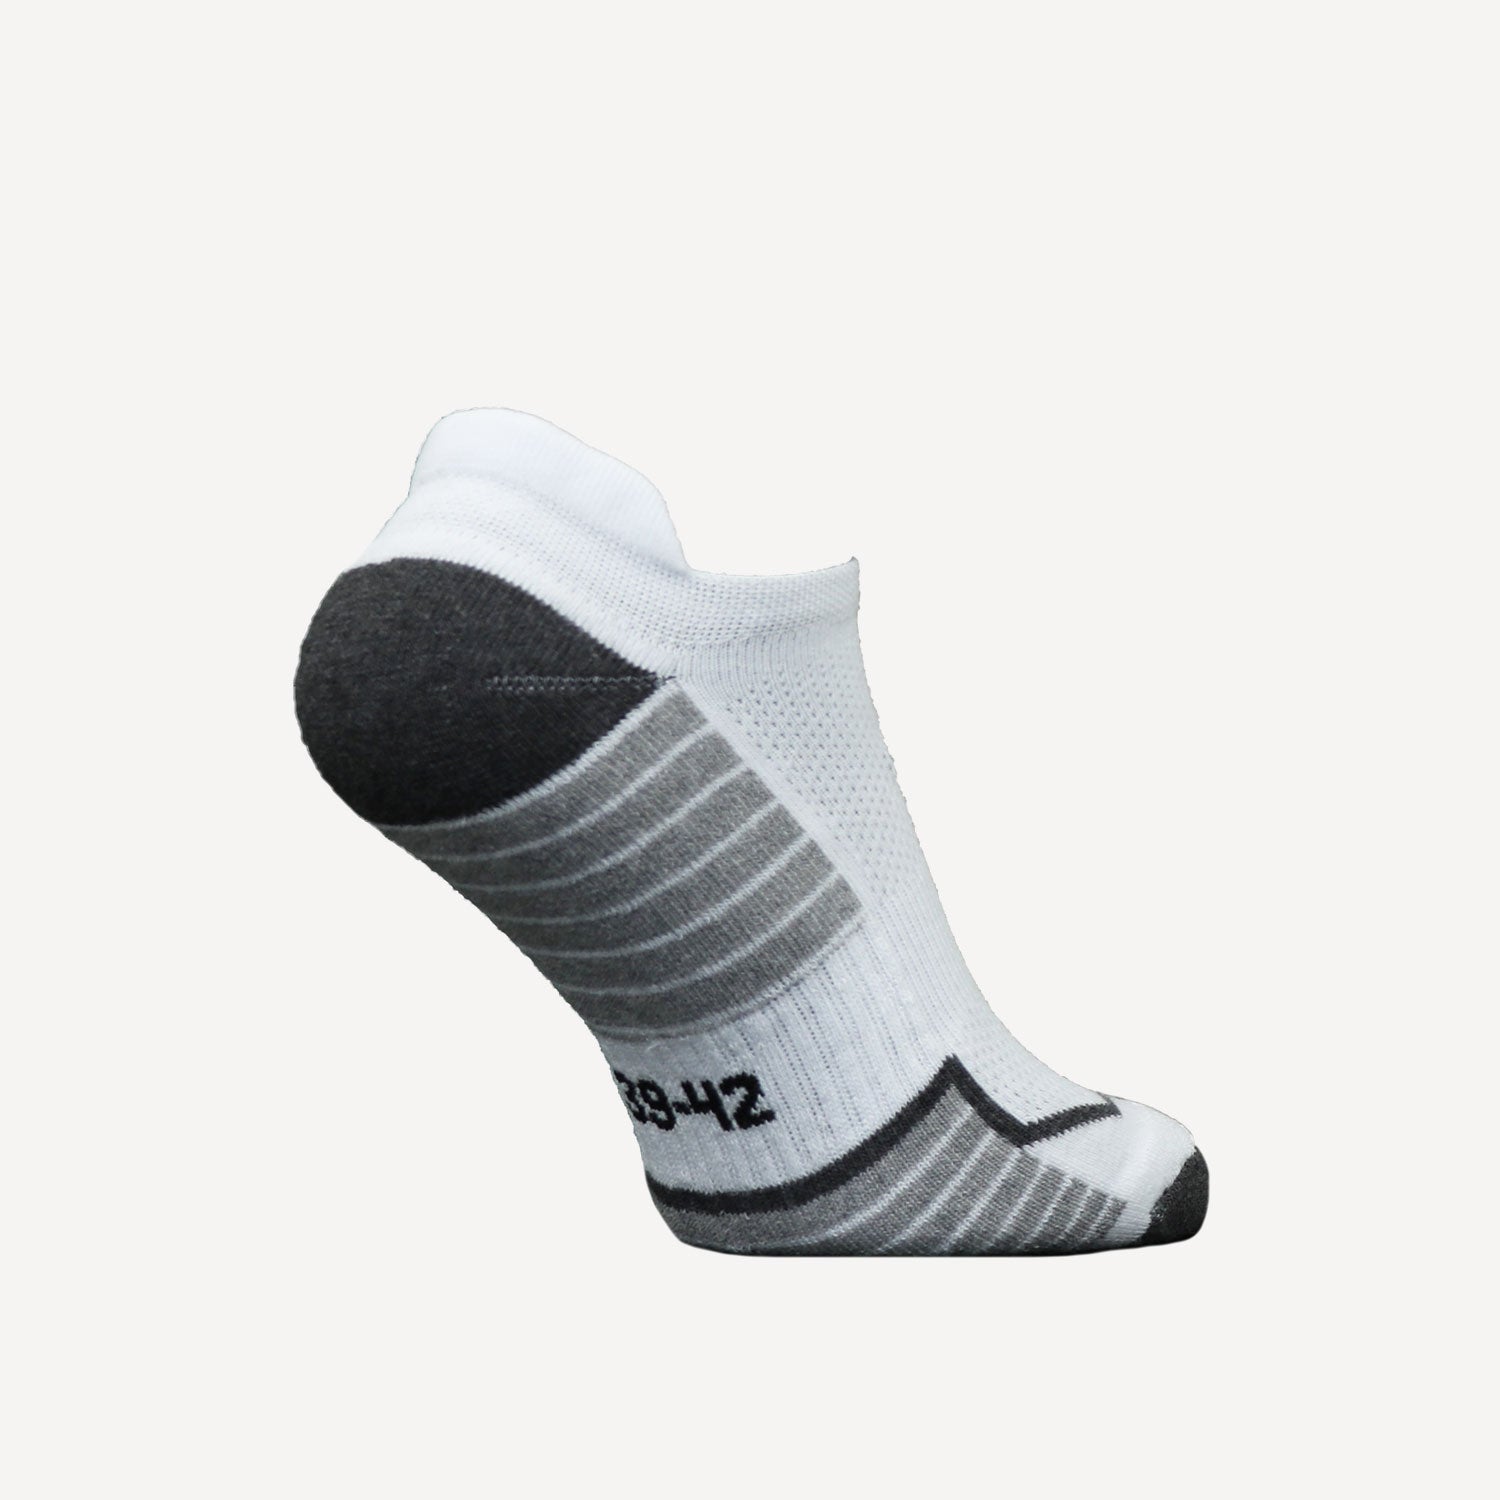 The Indian Maharadja Kadiri Low Tennis Socks - De Delftse Hout - White (2)